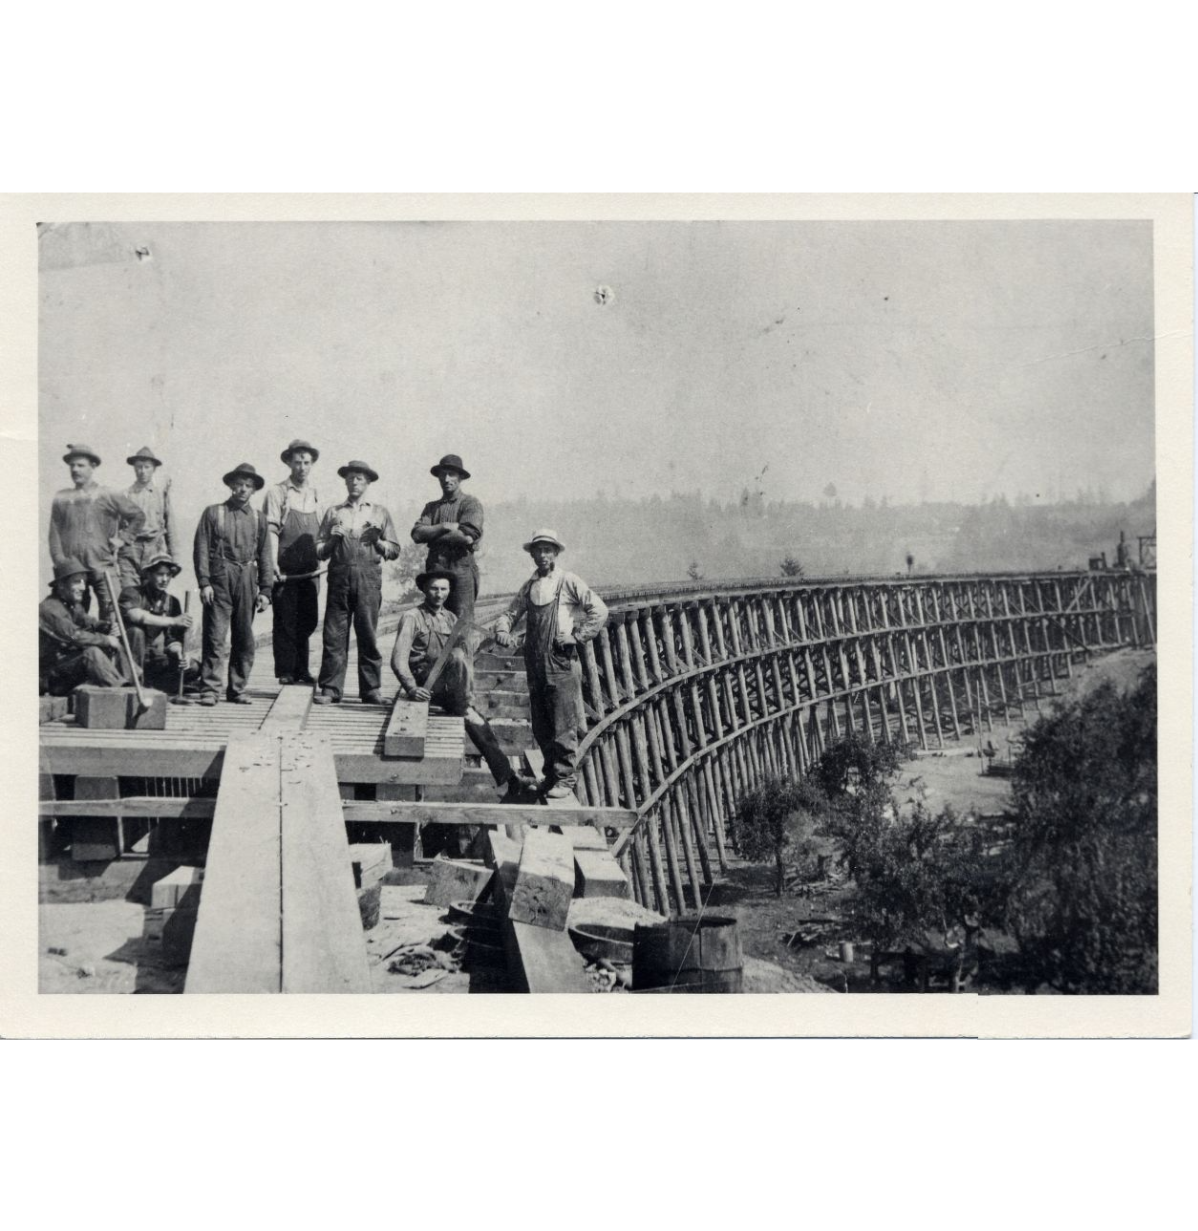 Circa 1910 photograph of ten men on a half-built railroad bridge in Oswego